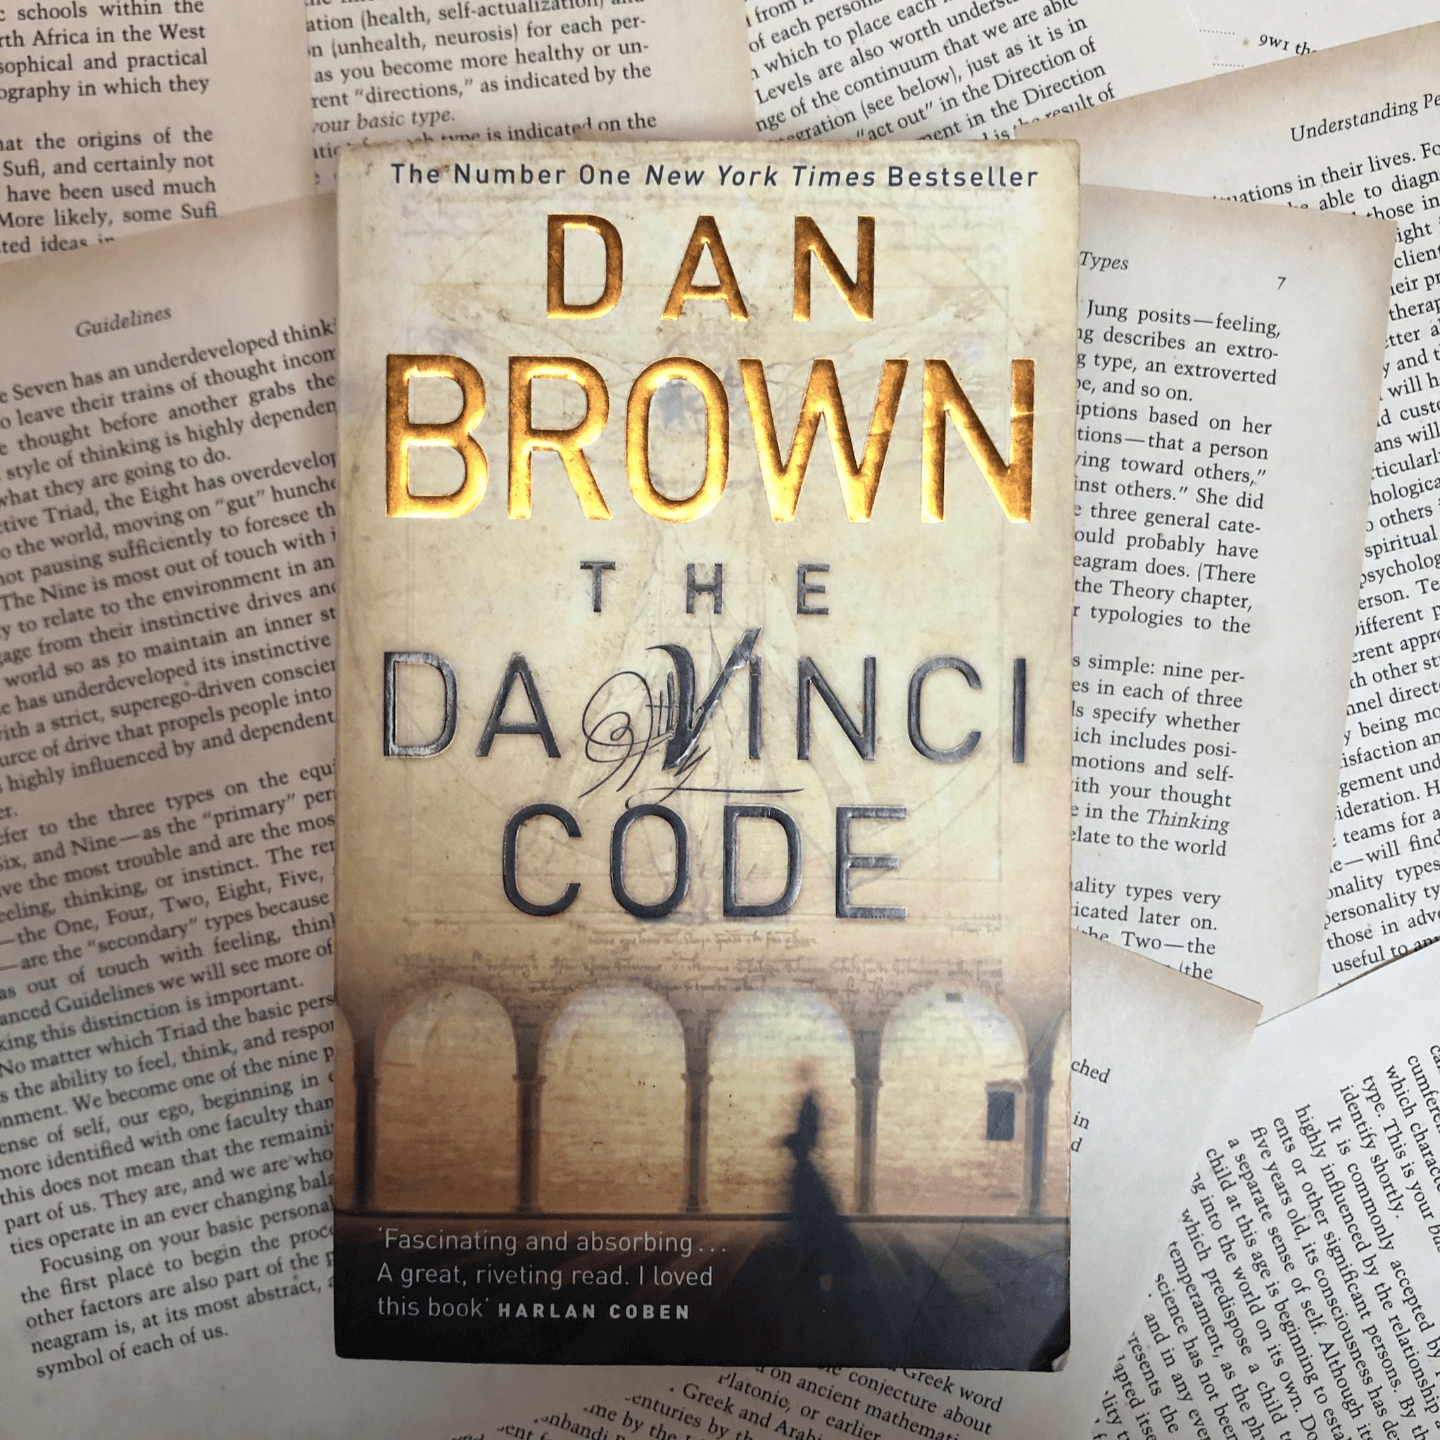 The Da Vinci Code by Dan Brown [Paperback]